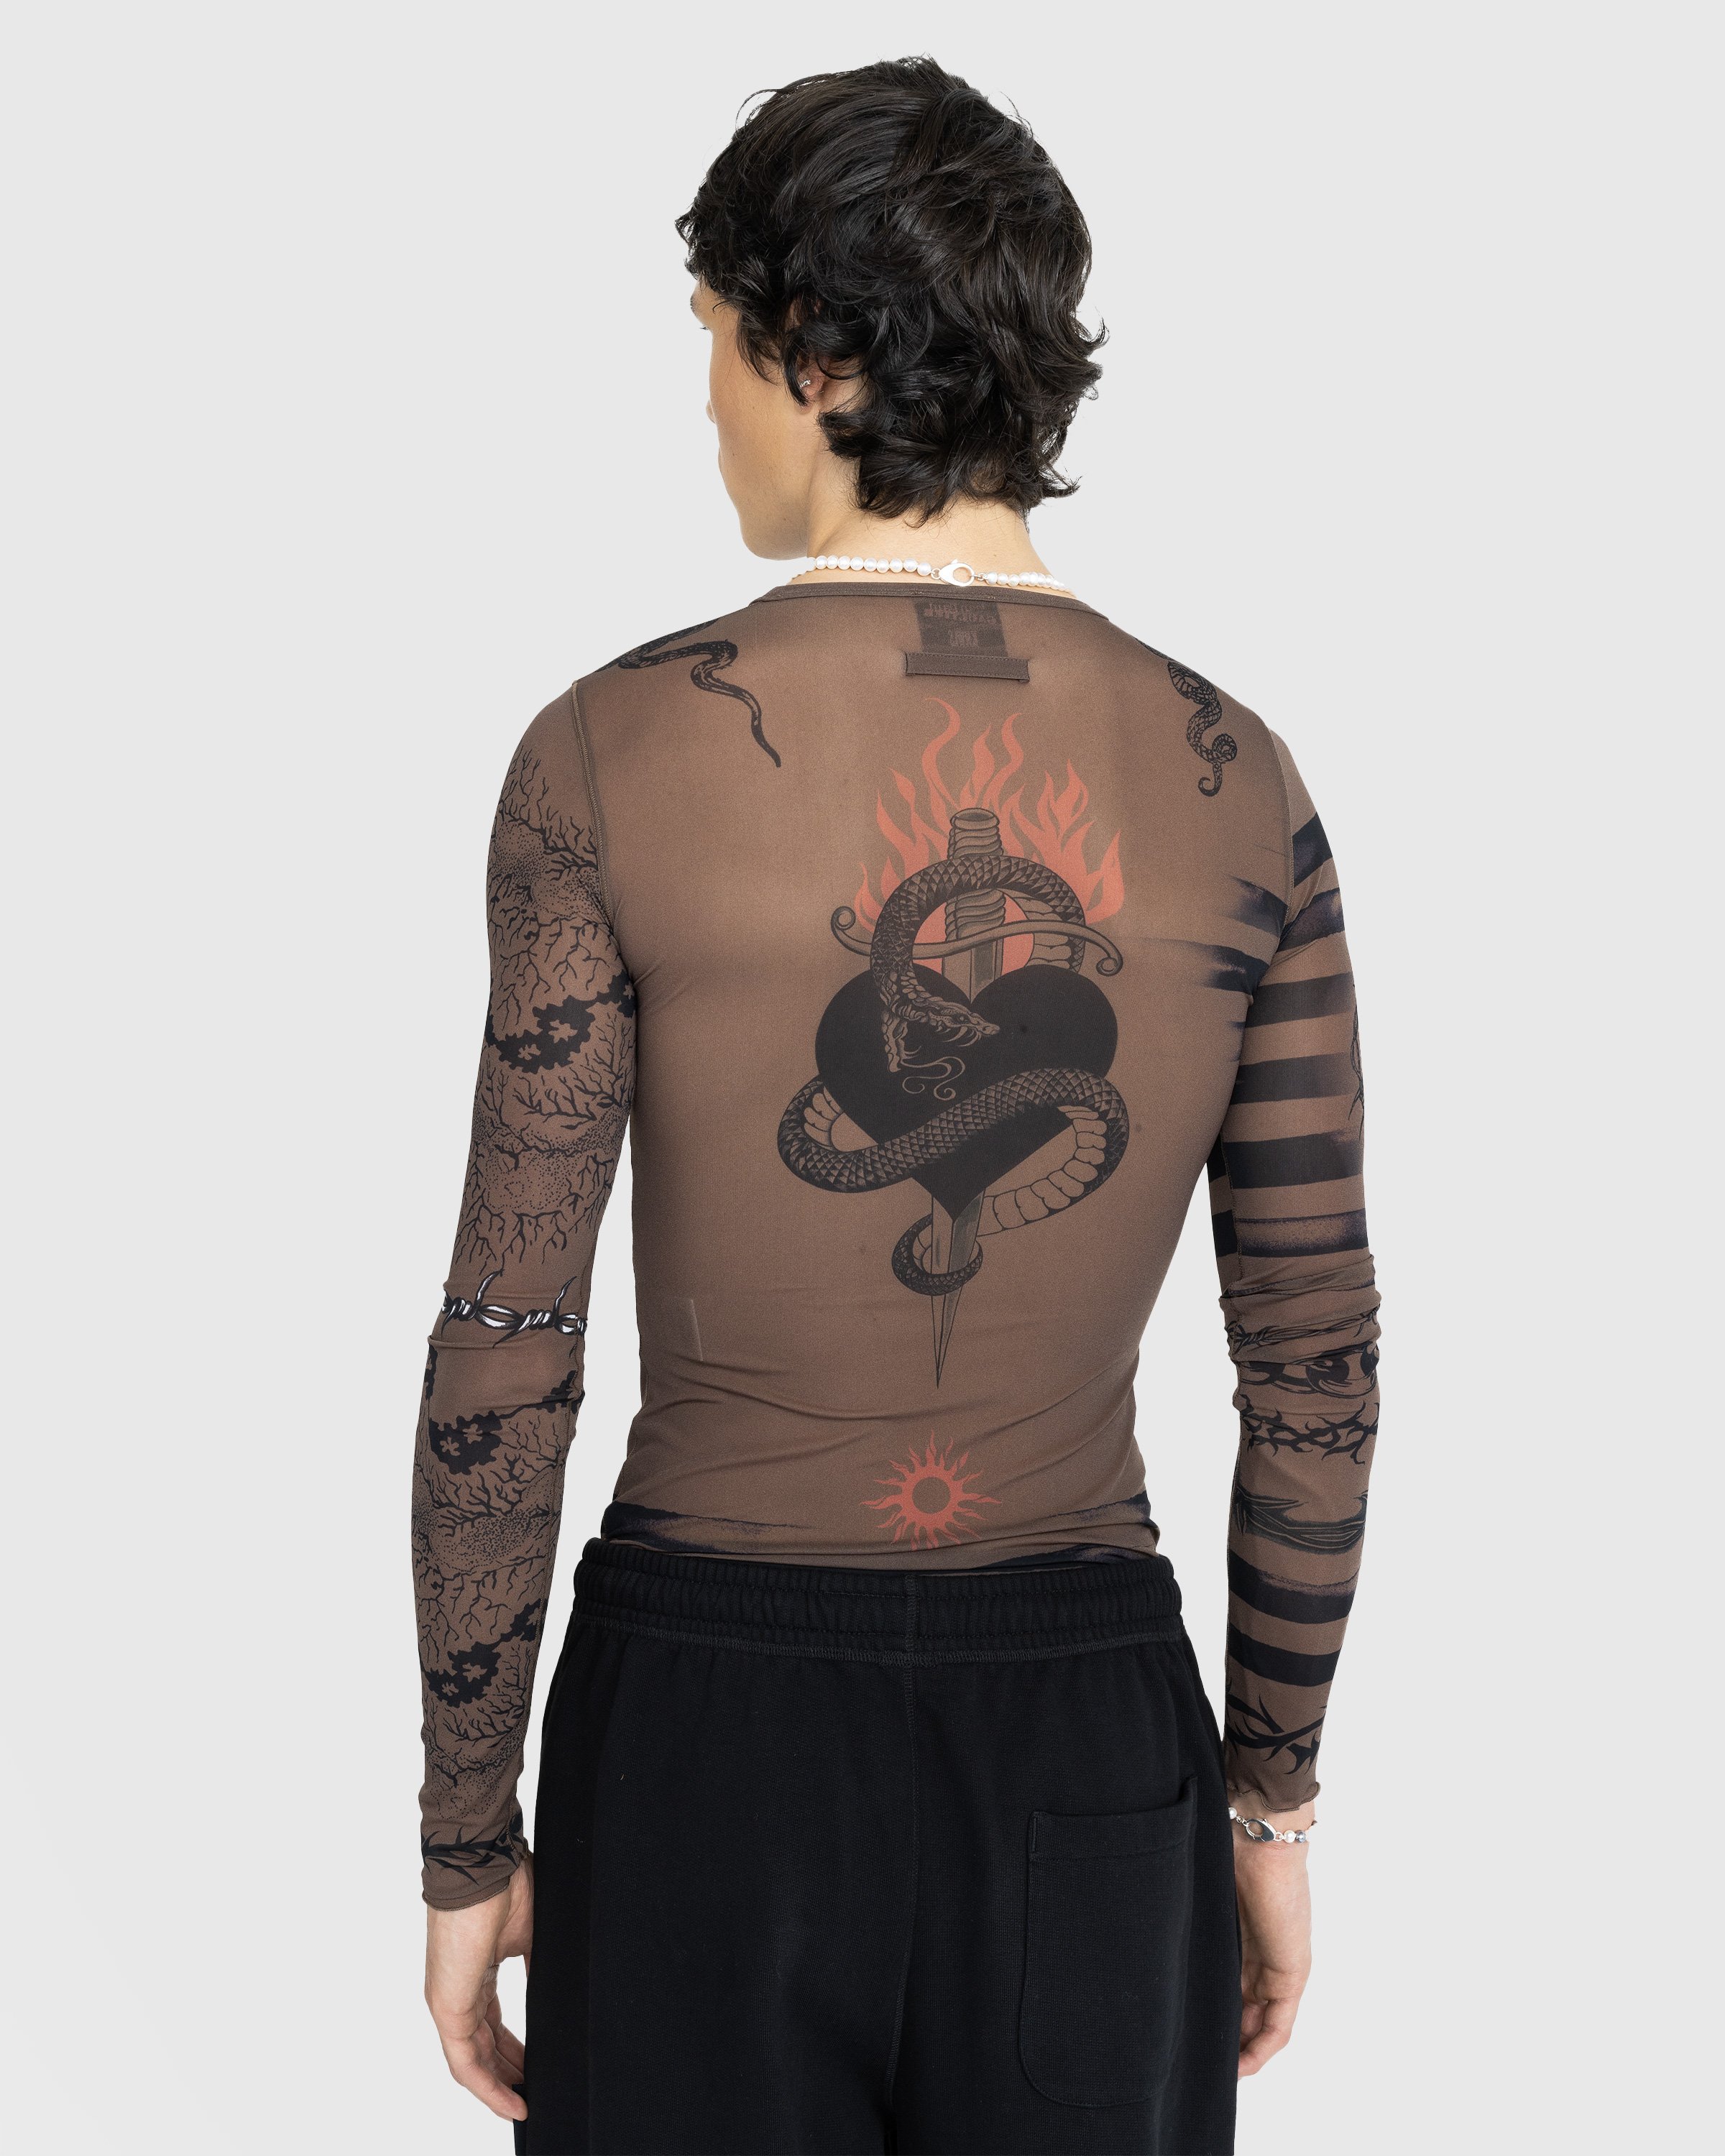 Jean Paul Gaultier - Trompe l'oeil Tattoo Longsleeve Top Ebene/Grey/Black - Clothing - Brown - Image 3